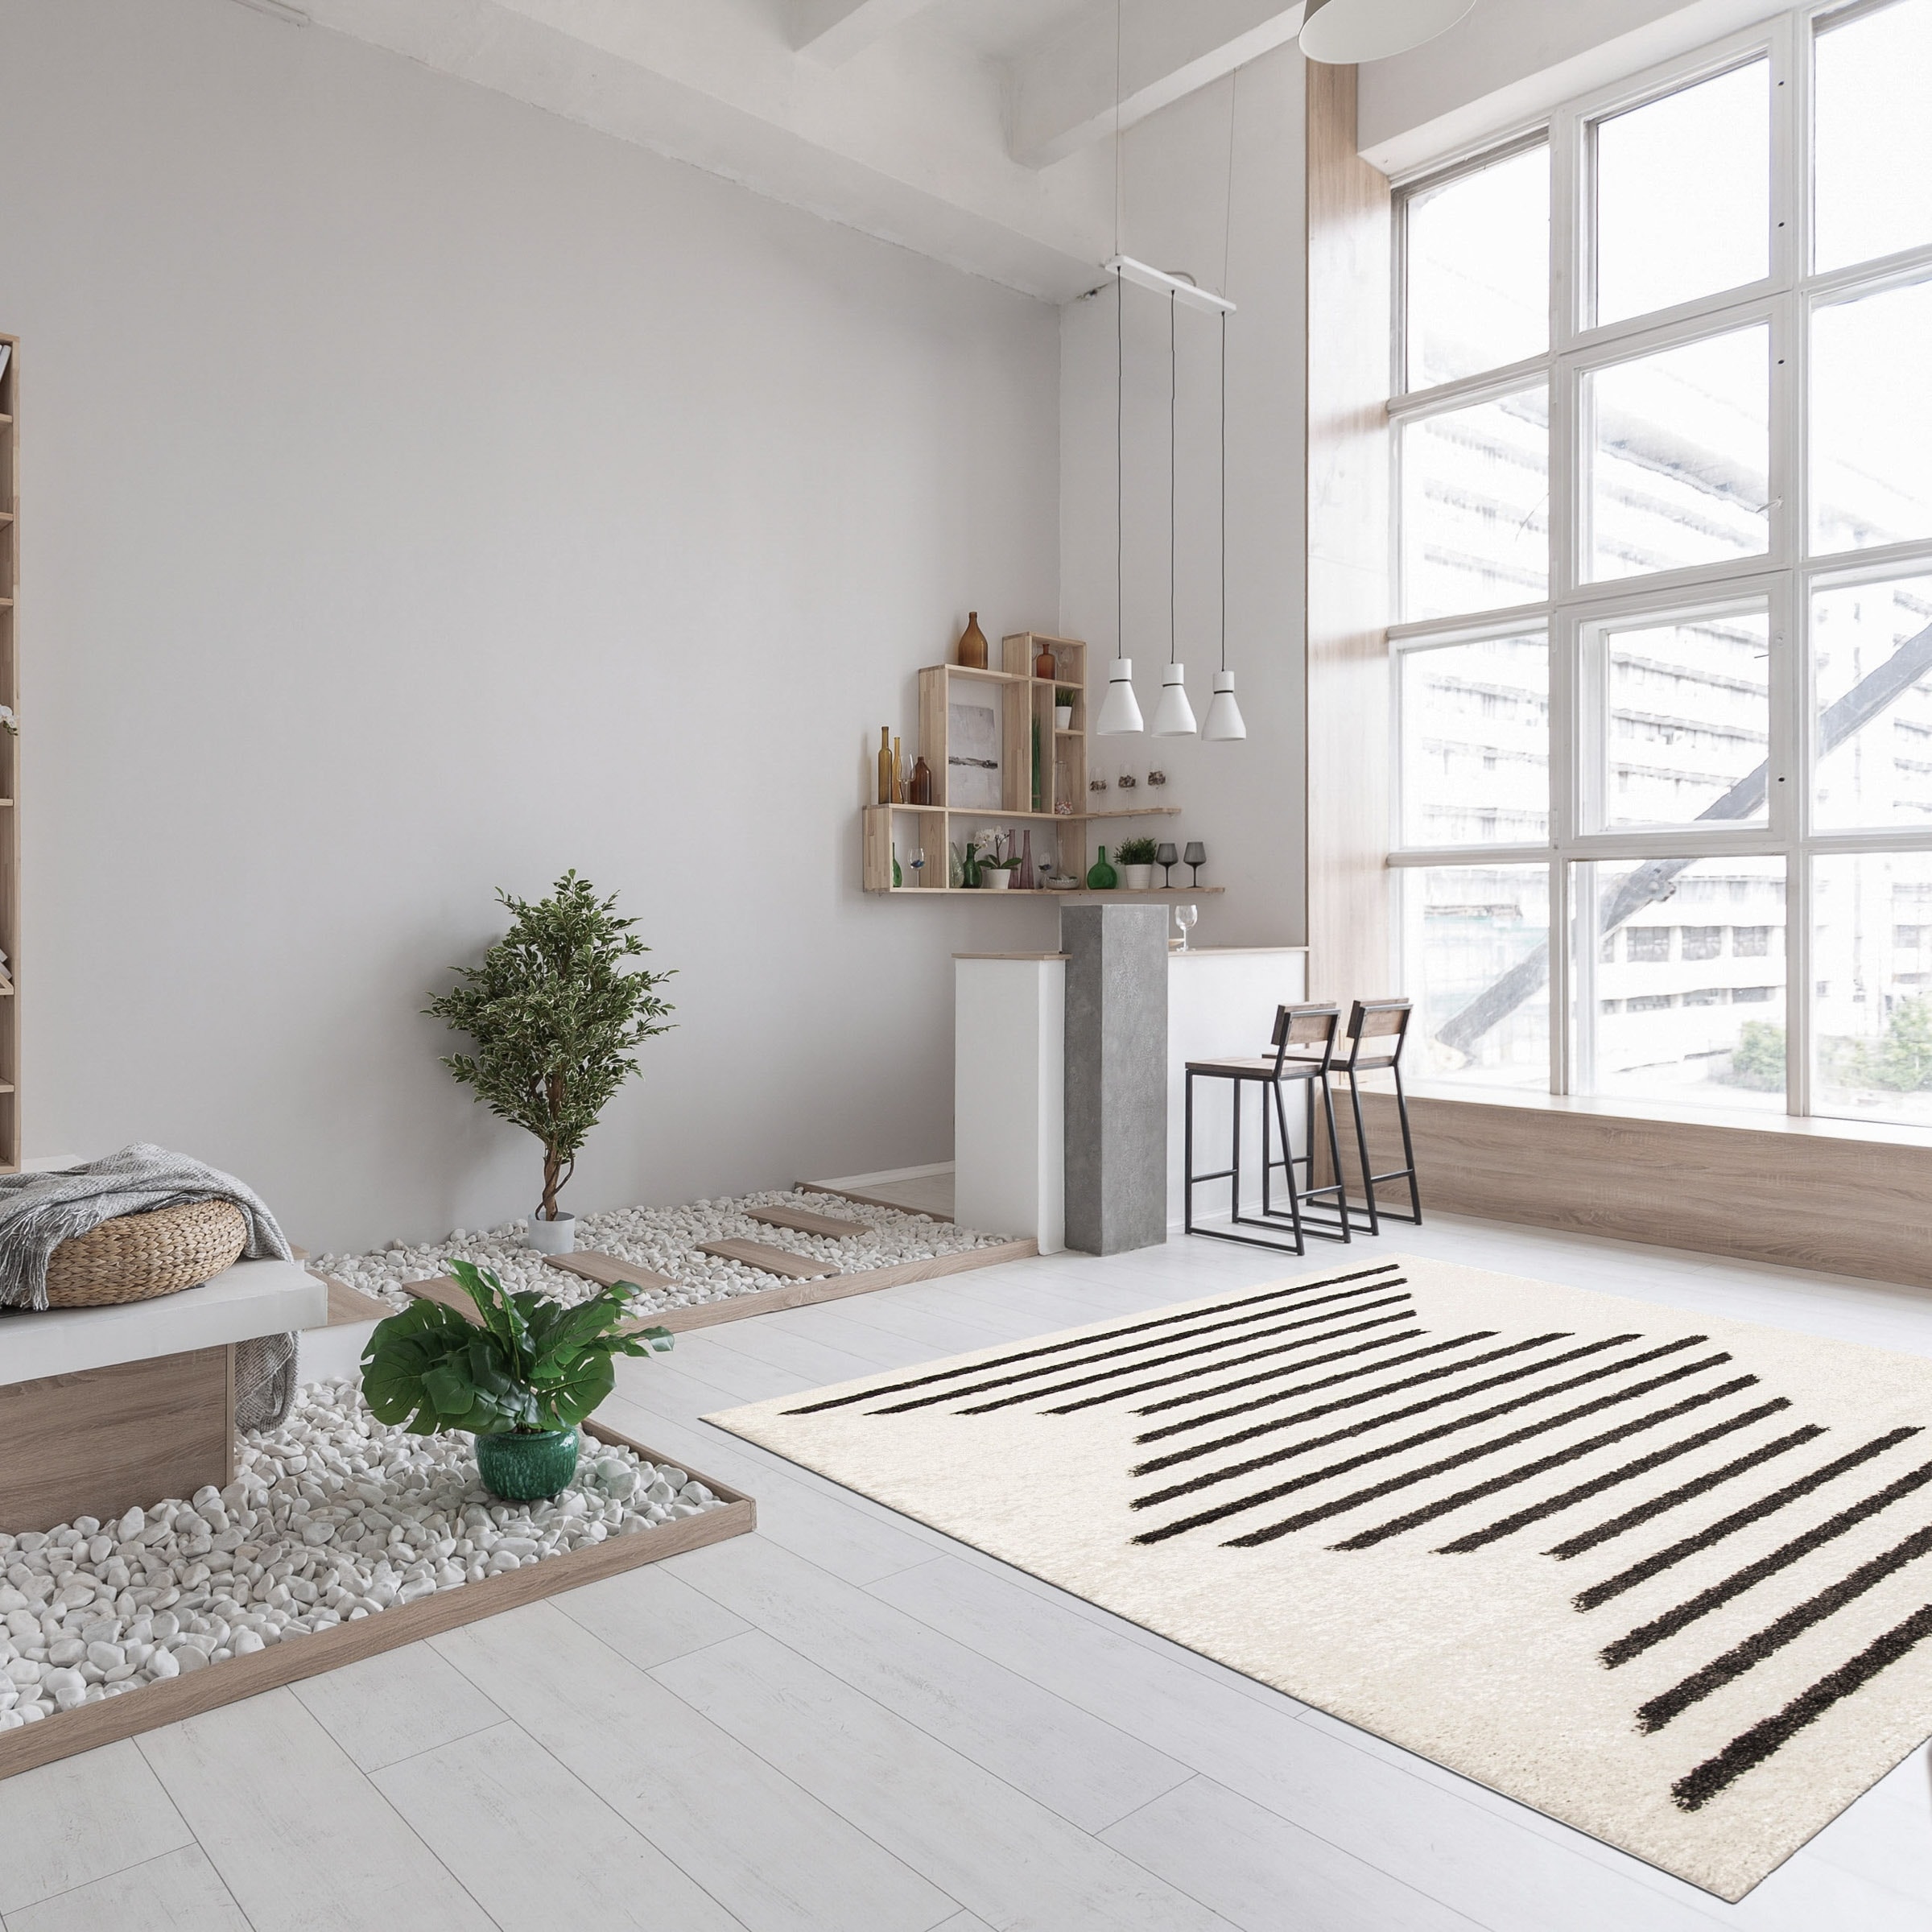 Fluffy Bedroom Carpet 3'11 x 6'0 Grey ECARPETGALLERY Modern Shag Area Rug for Living Room 